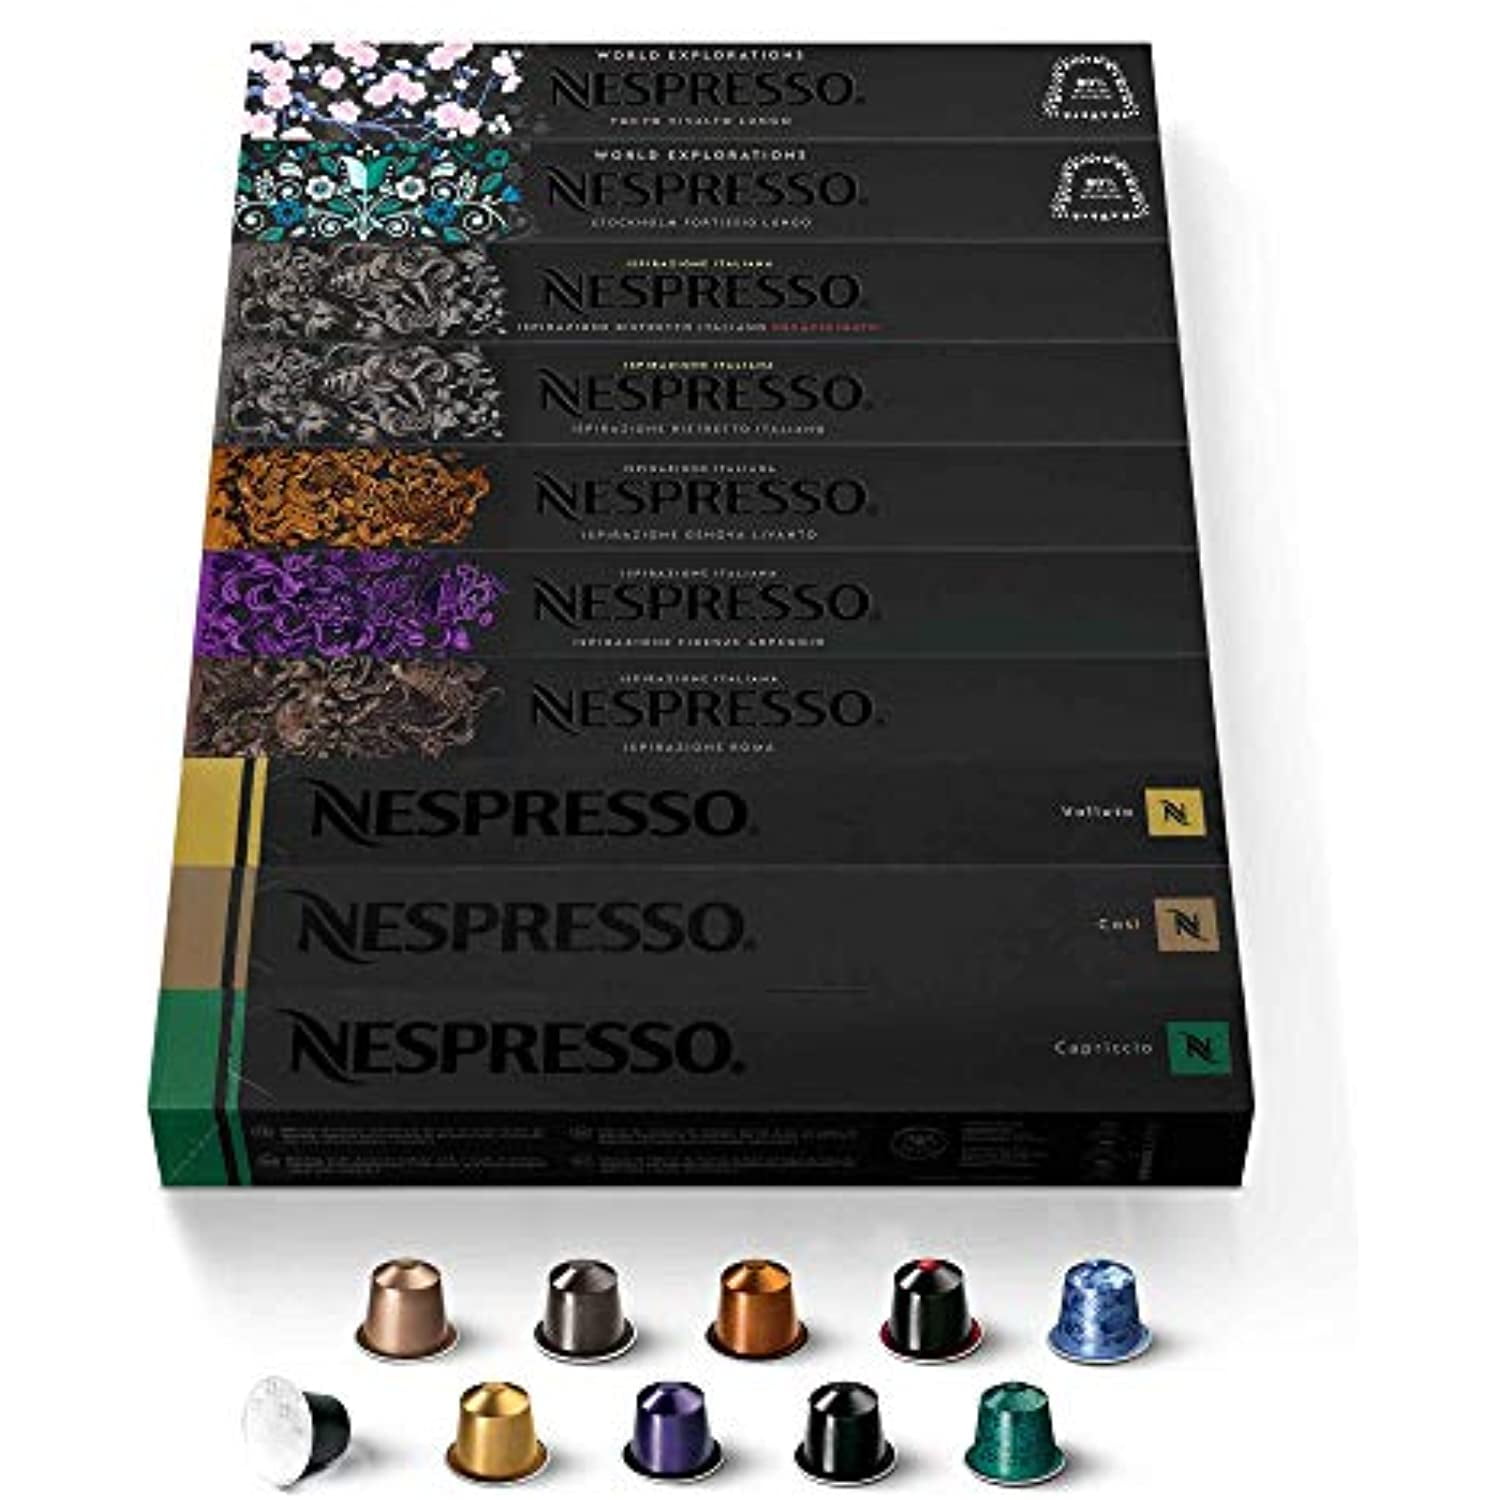  European Version Nespresso OriginalLine Variety of Dark  Intense, Medium Balanced and Sweet Flavored Coffees, 100 Capsules : Grocery  & Gourmet Food